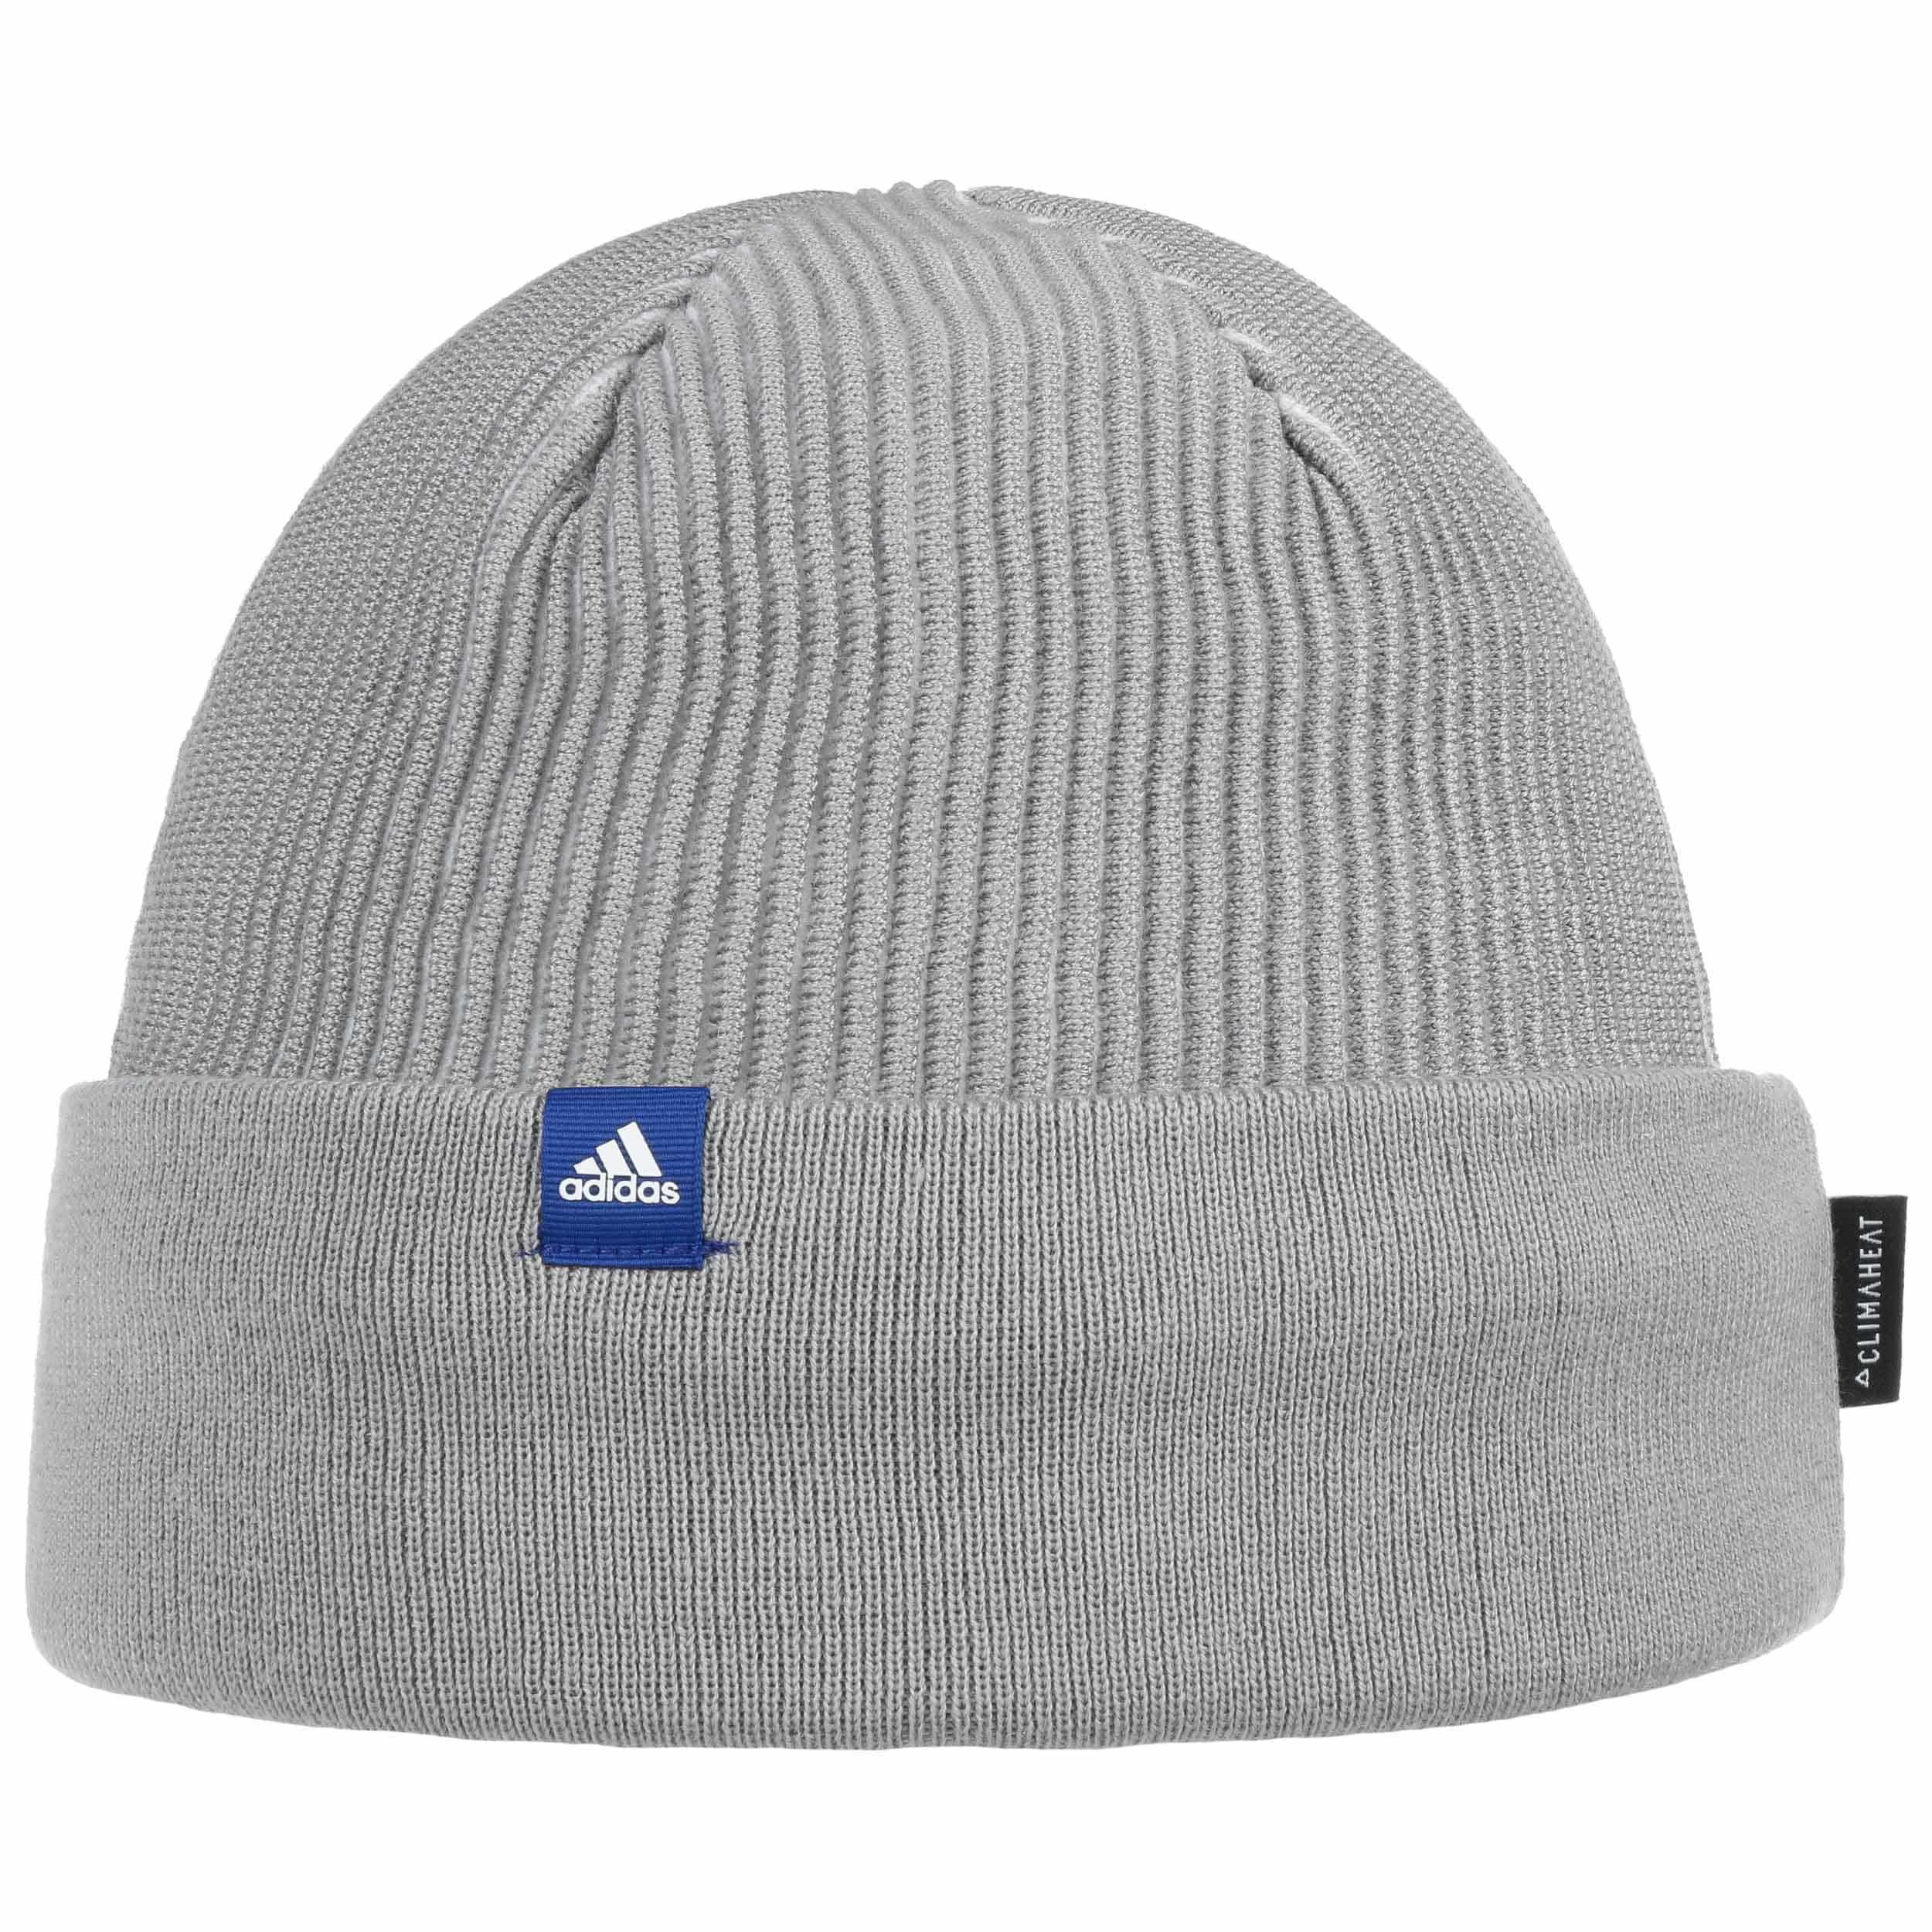 adidas winter hat with brim